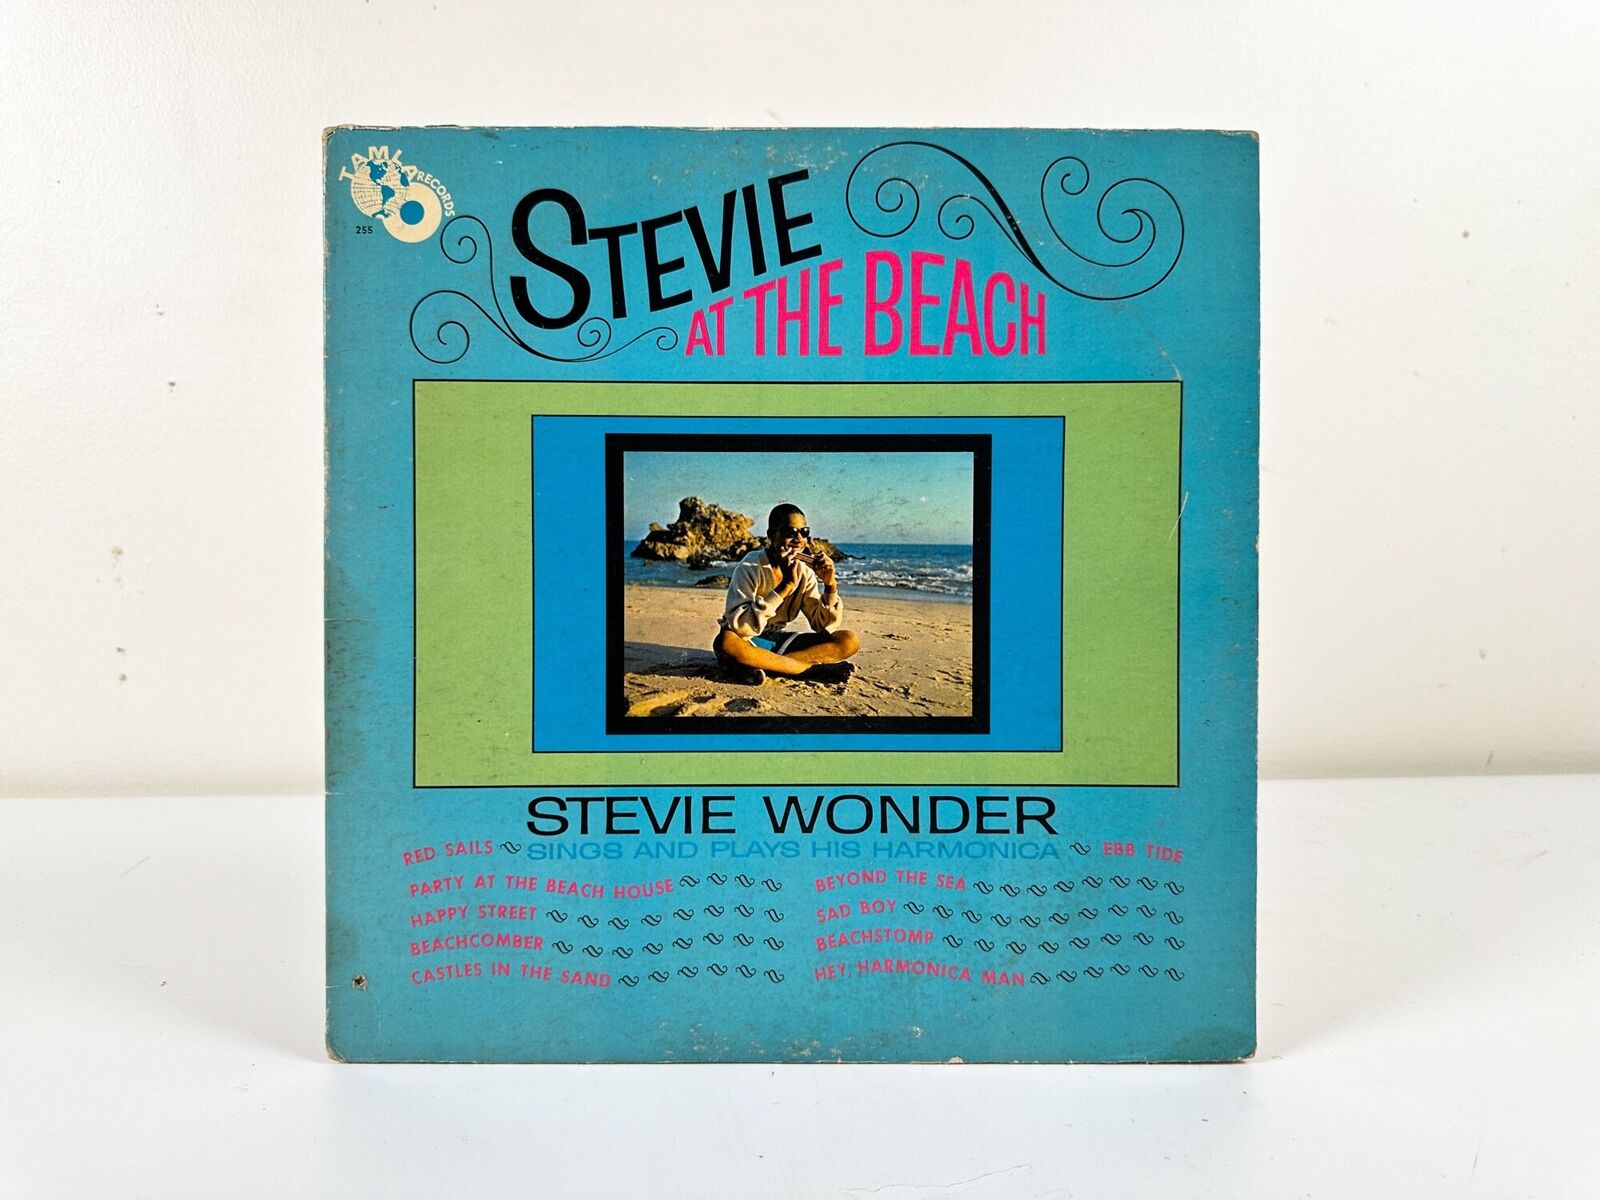 Stevie Wonder - Stevie At The Beach - Vinyl LP Record - 1964